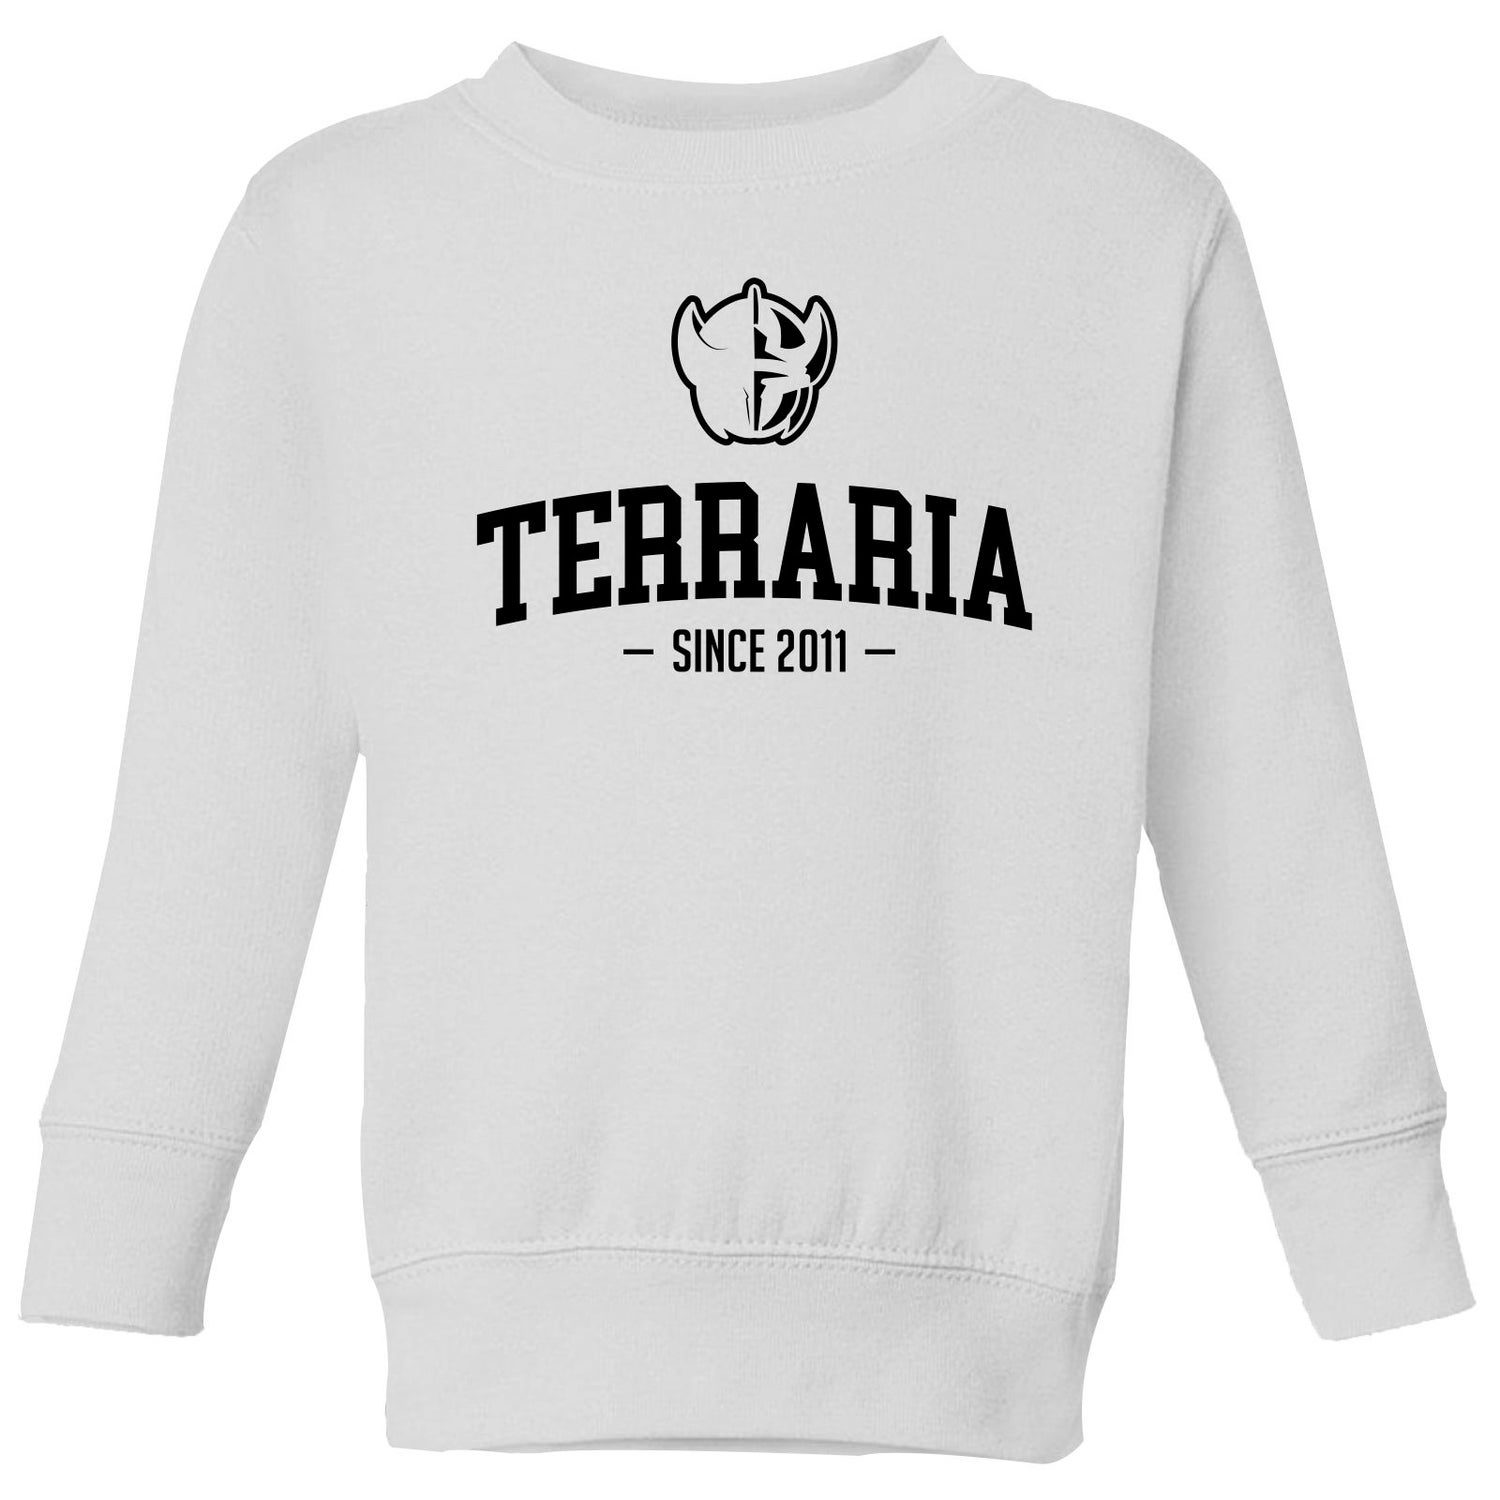 Terraria Since 2011 Kids' Sweatshirt - White